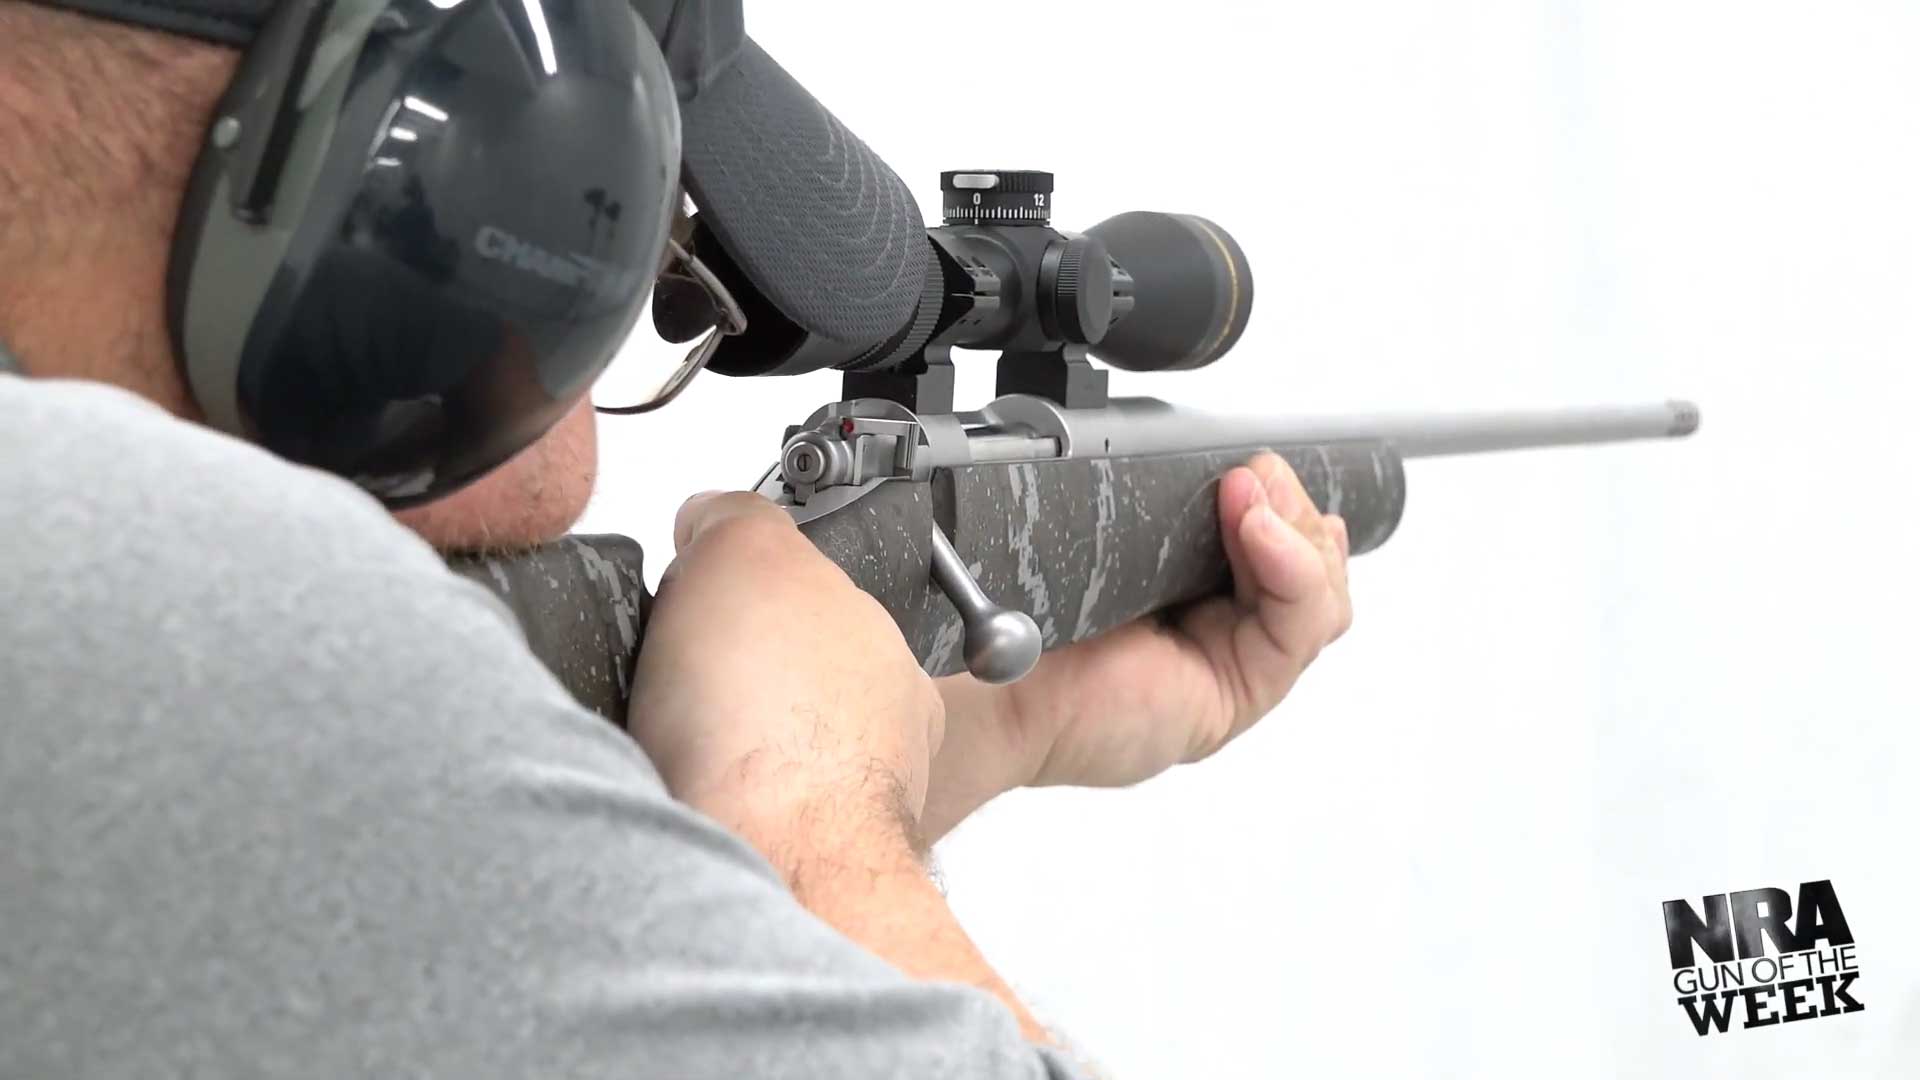 Kimber America 84M Pro Desolve Blak rear action view shooting range man ear protection hat riflescope